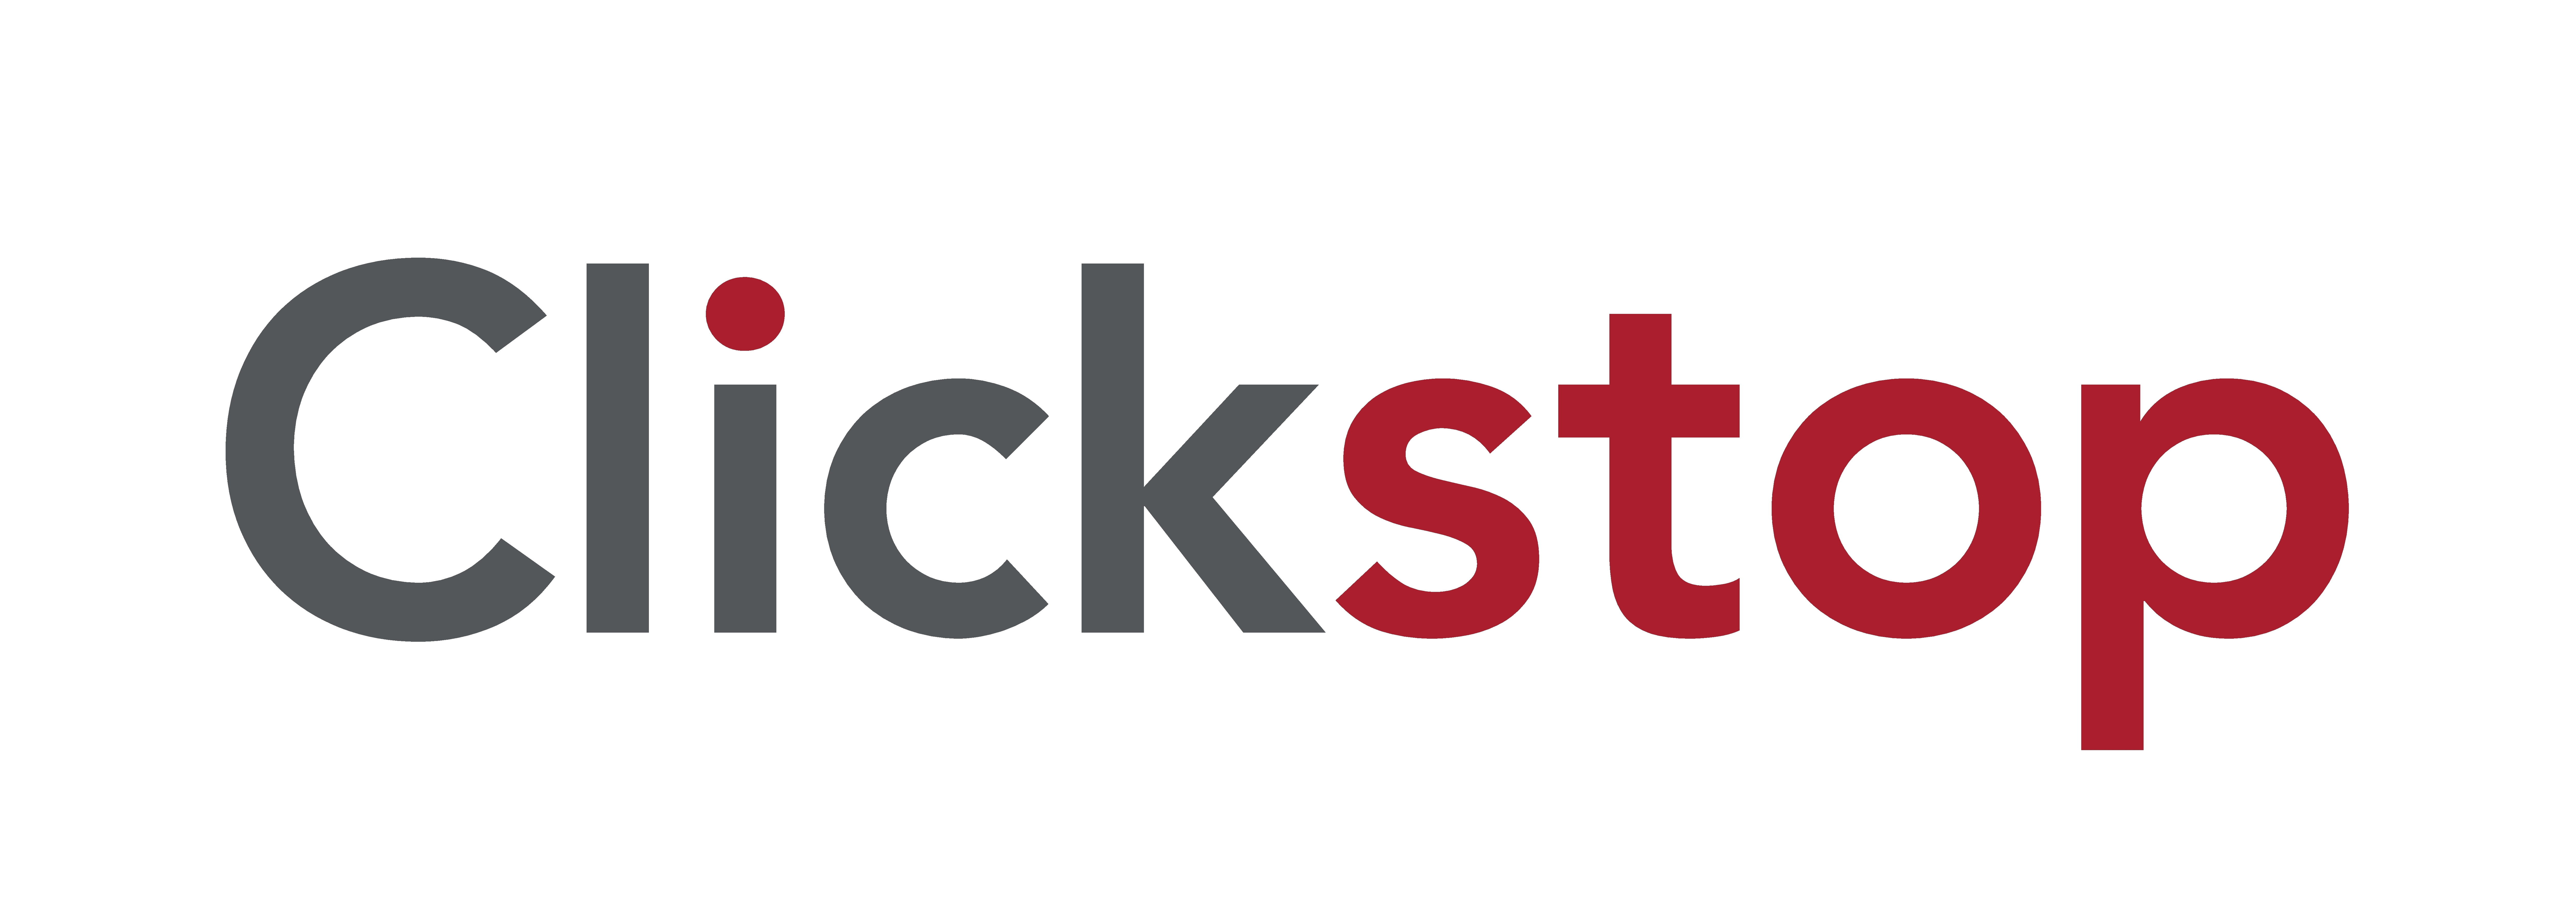 Clickstop, Inc. logo